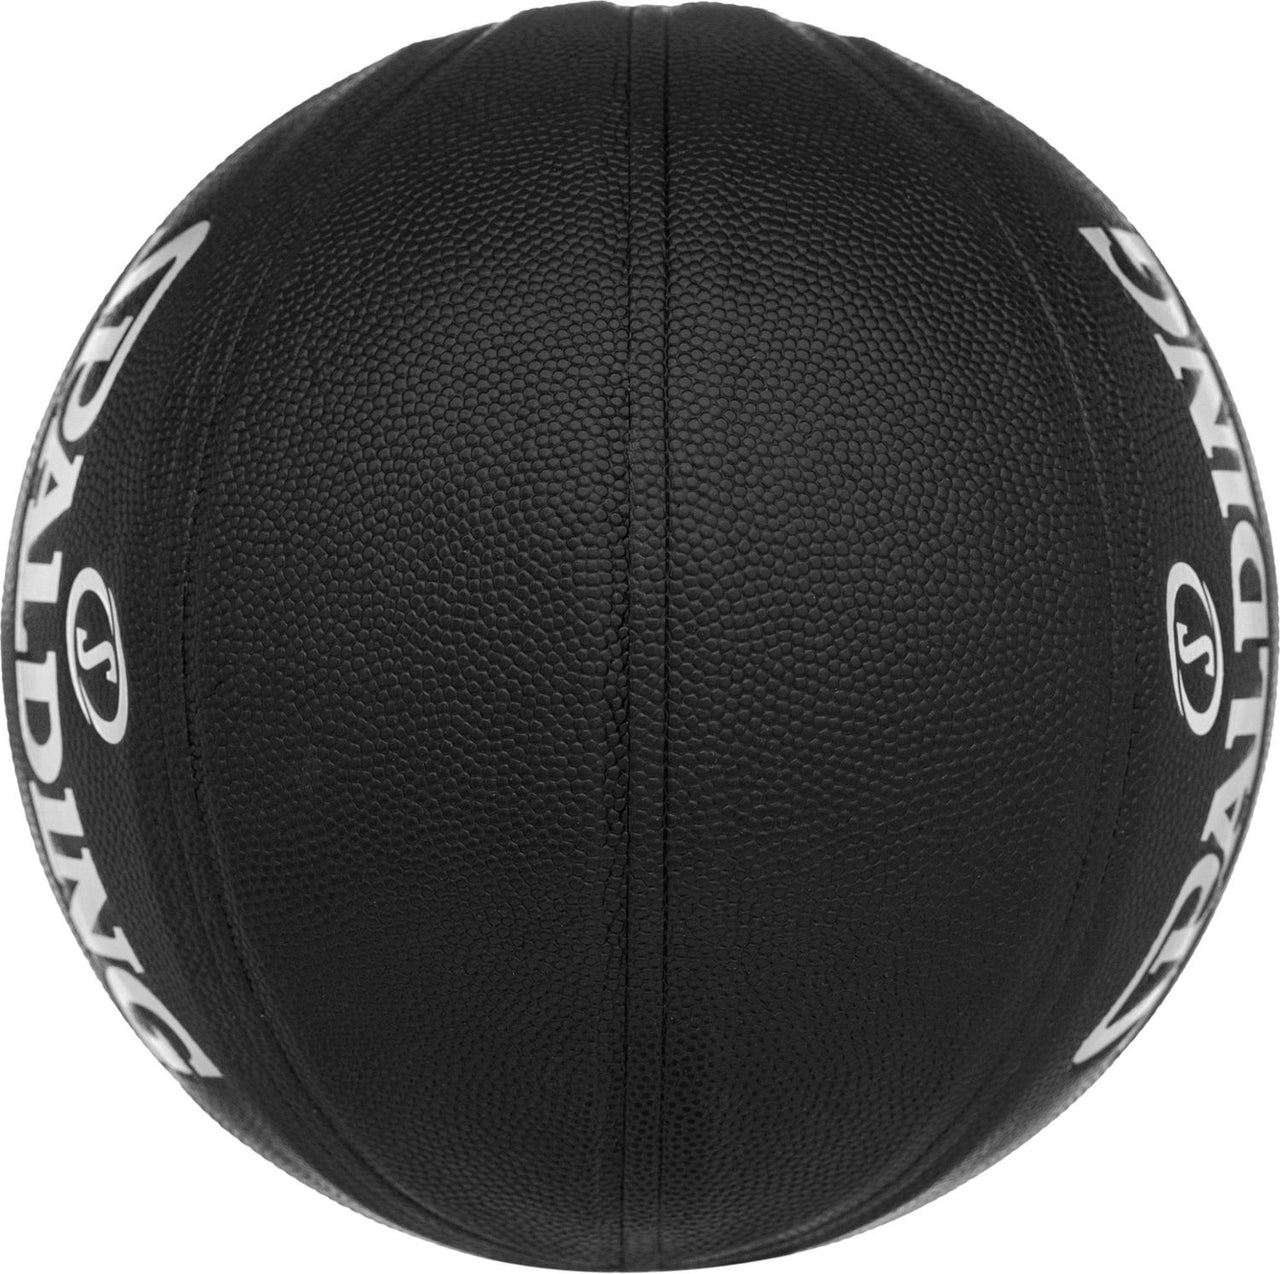 Spalding Neverflat Basketball